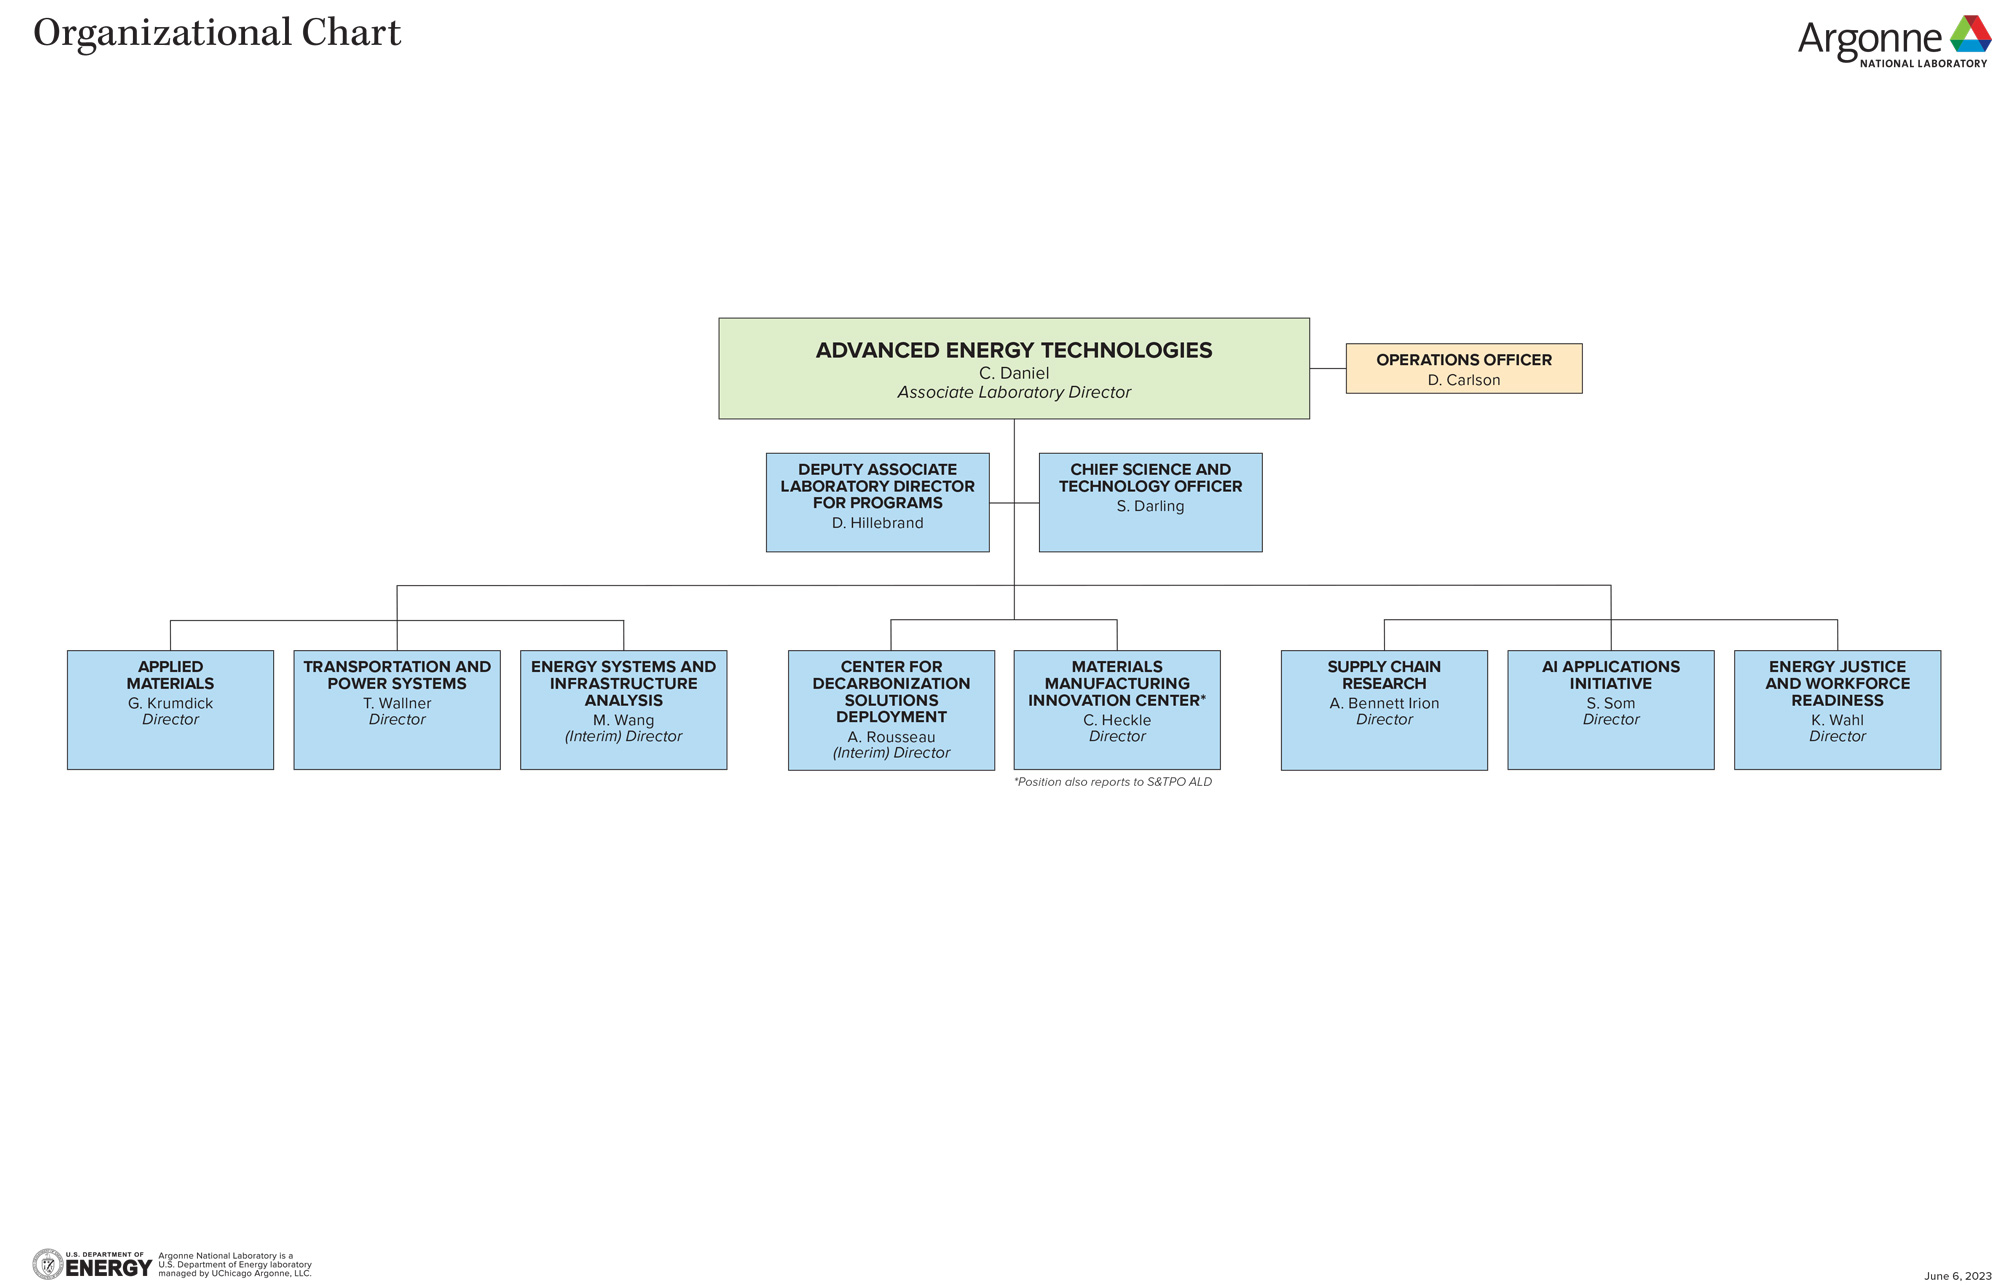 Organizational chart of the Argonne AET directorate.